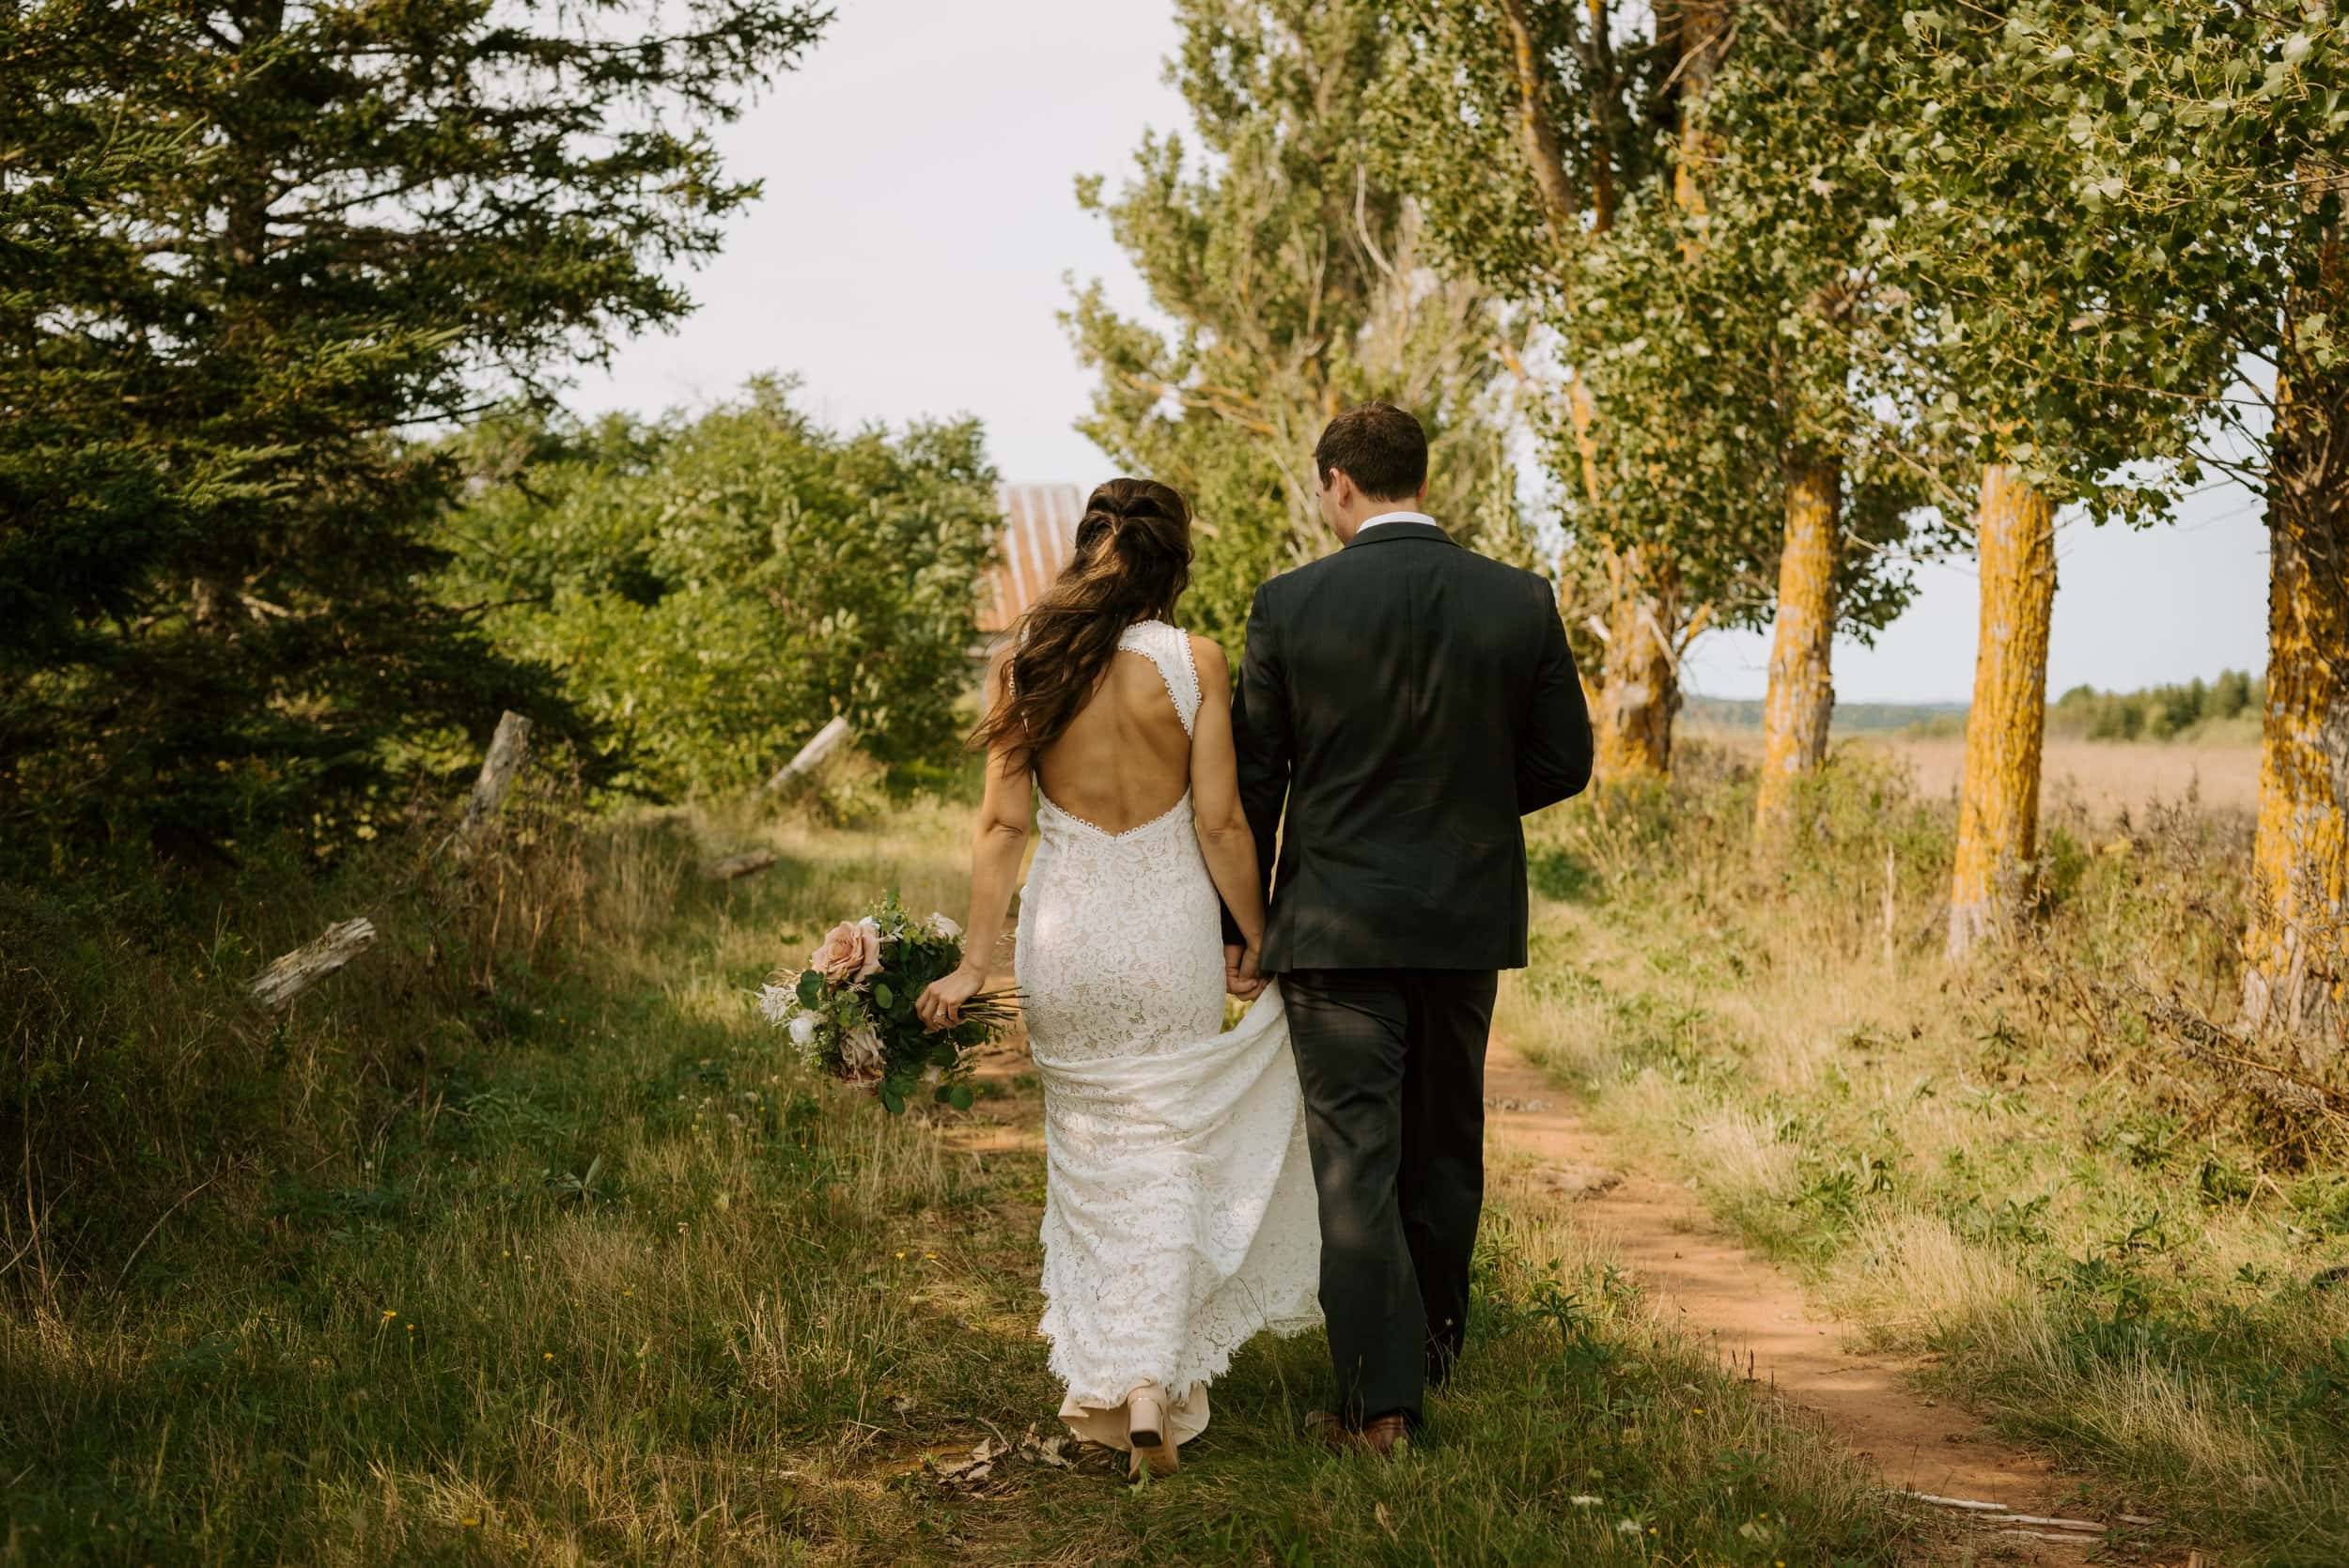 Prince Edward Island wedding photographer - Michaela Bell Photography